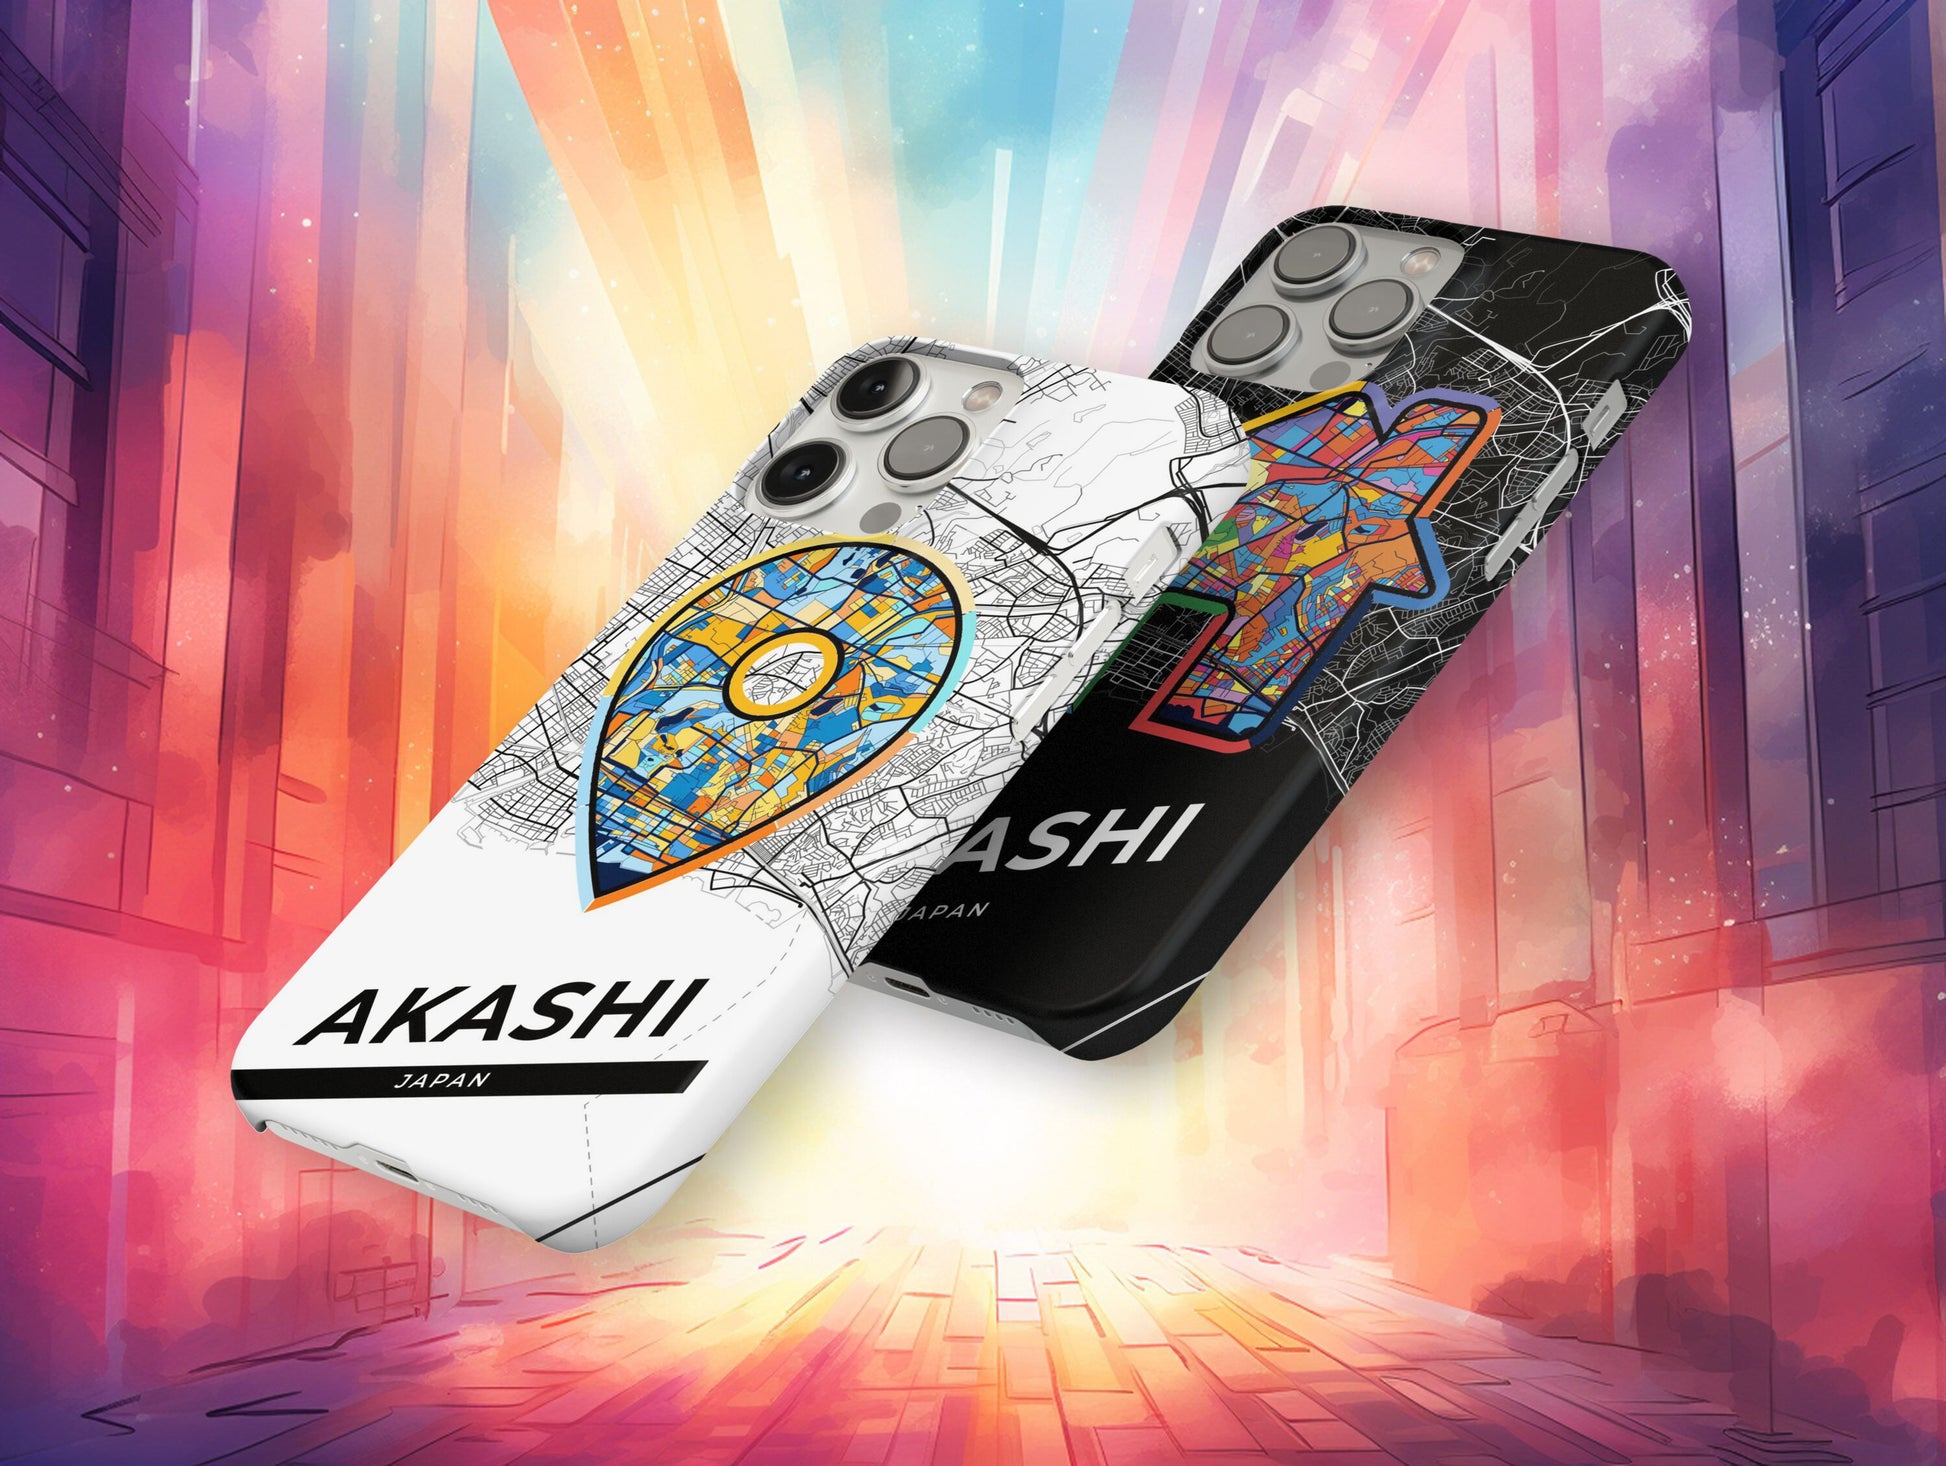 Akashi Japan slim phone case with colorful icon. Birthday, wedding or housewarming gift. Couple match cases.